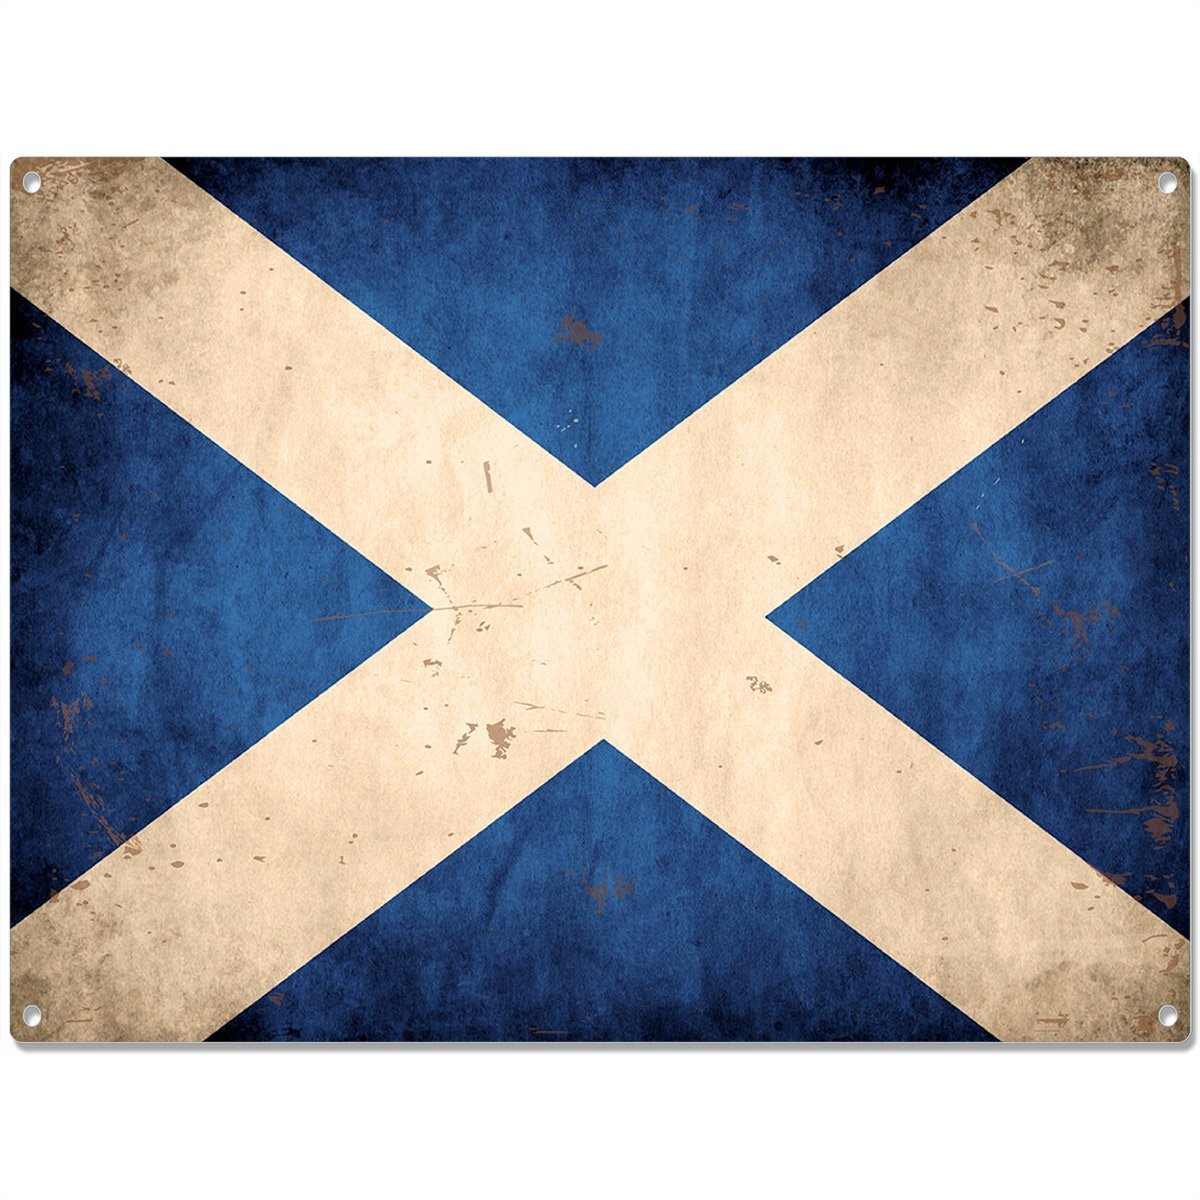 Флаг андреевский крест. Андреевский крест Шотландия. Флаг Шотландии и Андреевский флаг. Синий крест на белом. Флаг синий крест на белом фоне.